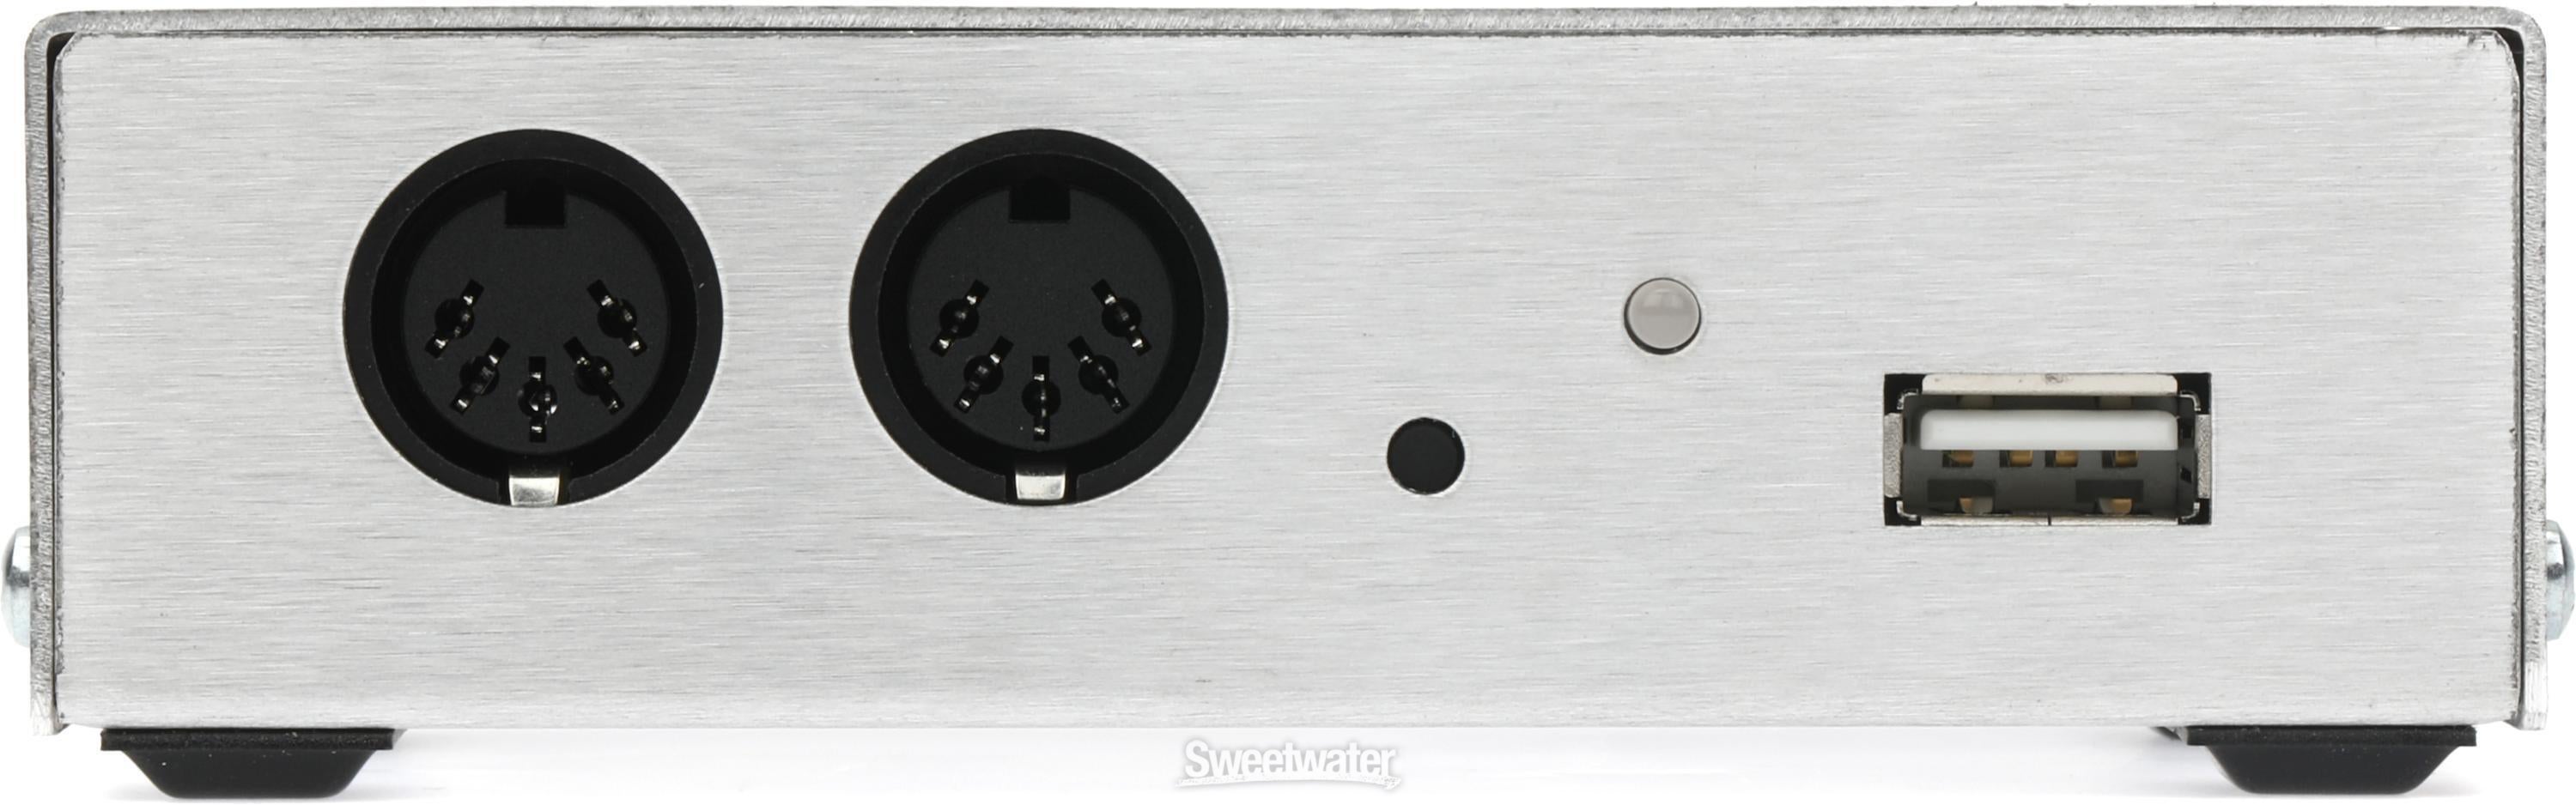 Kenton MIDI USB Host Mk3 USB Host to MIDI Converter | Sweetwater